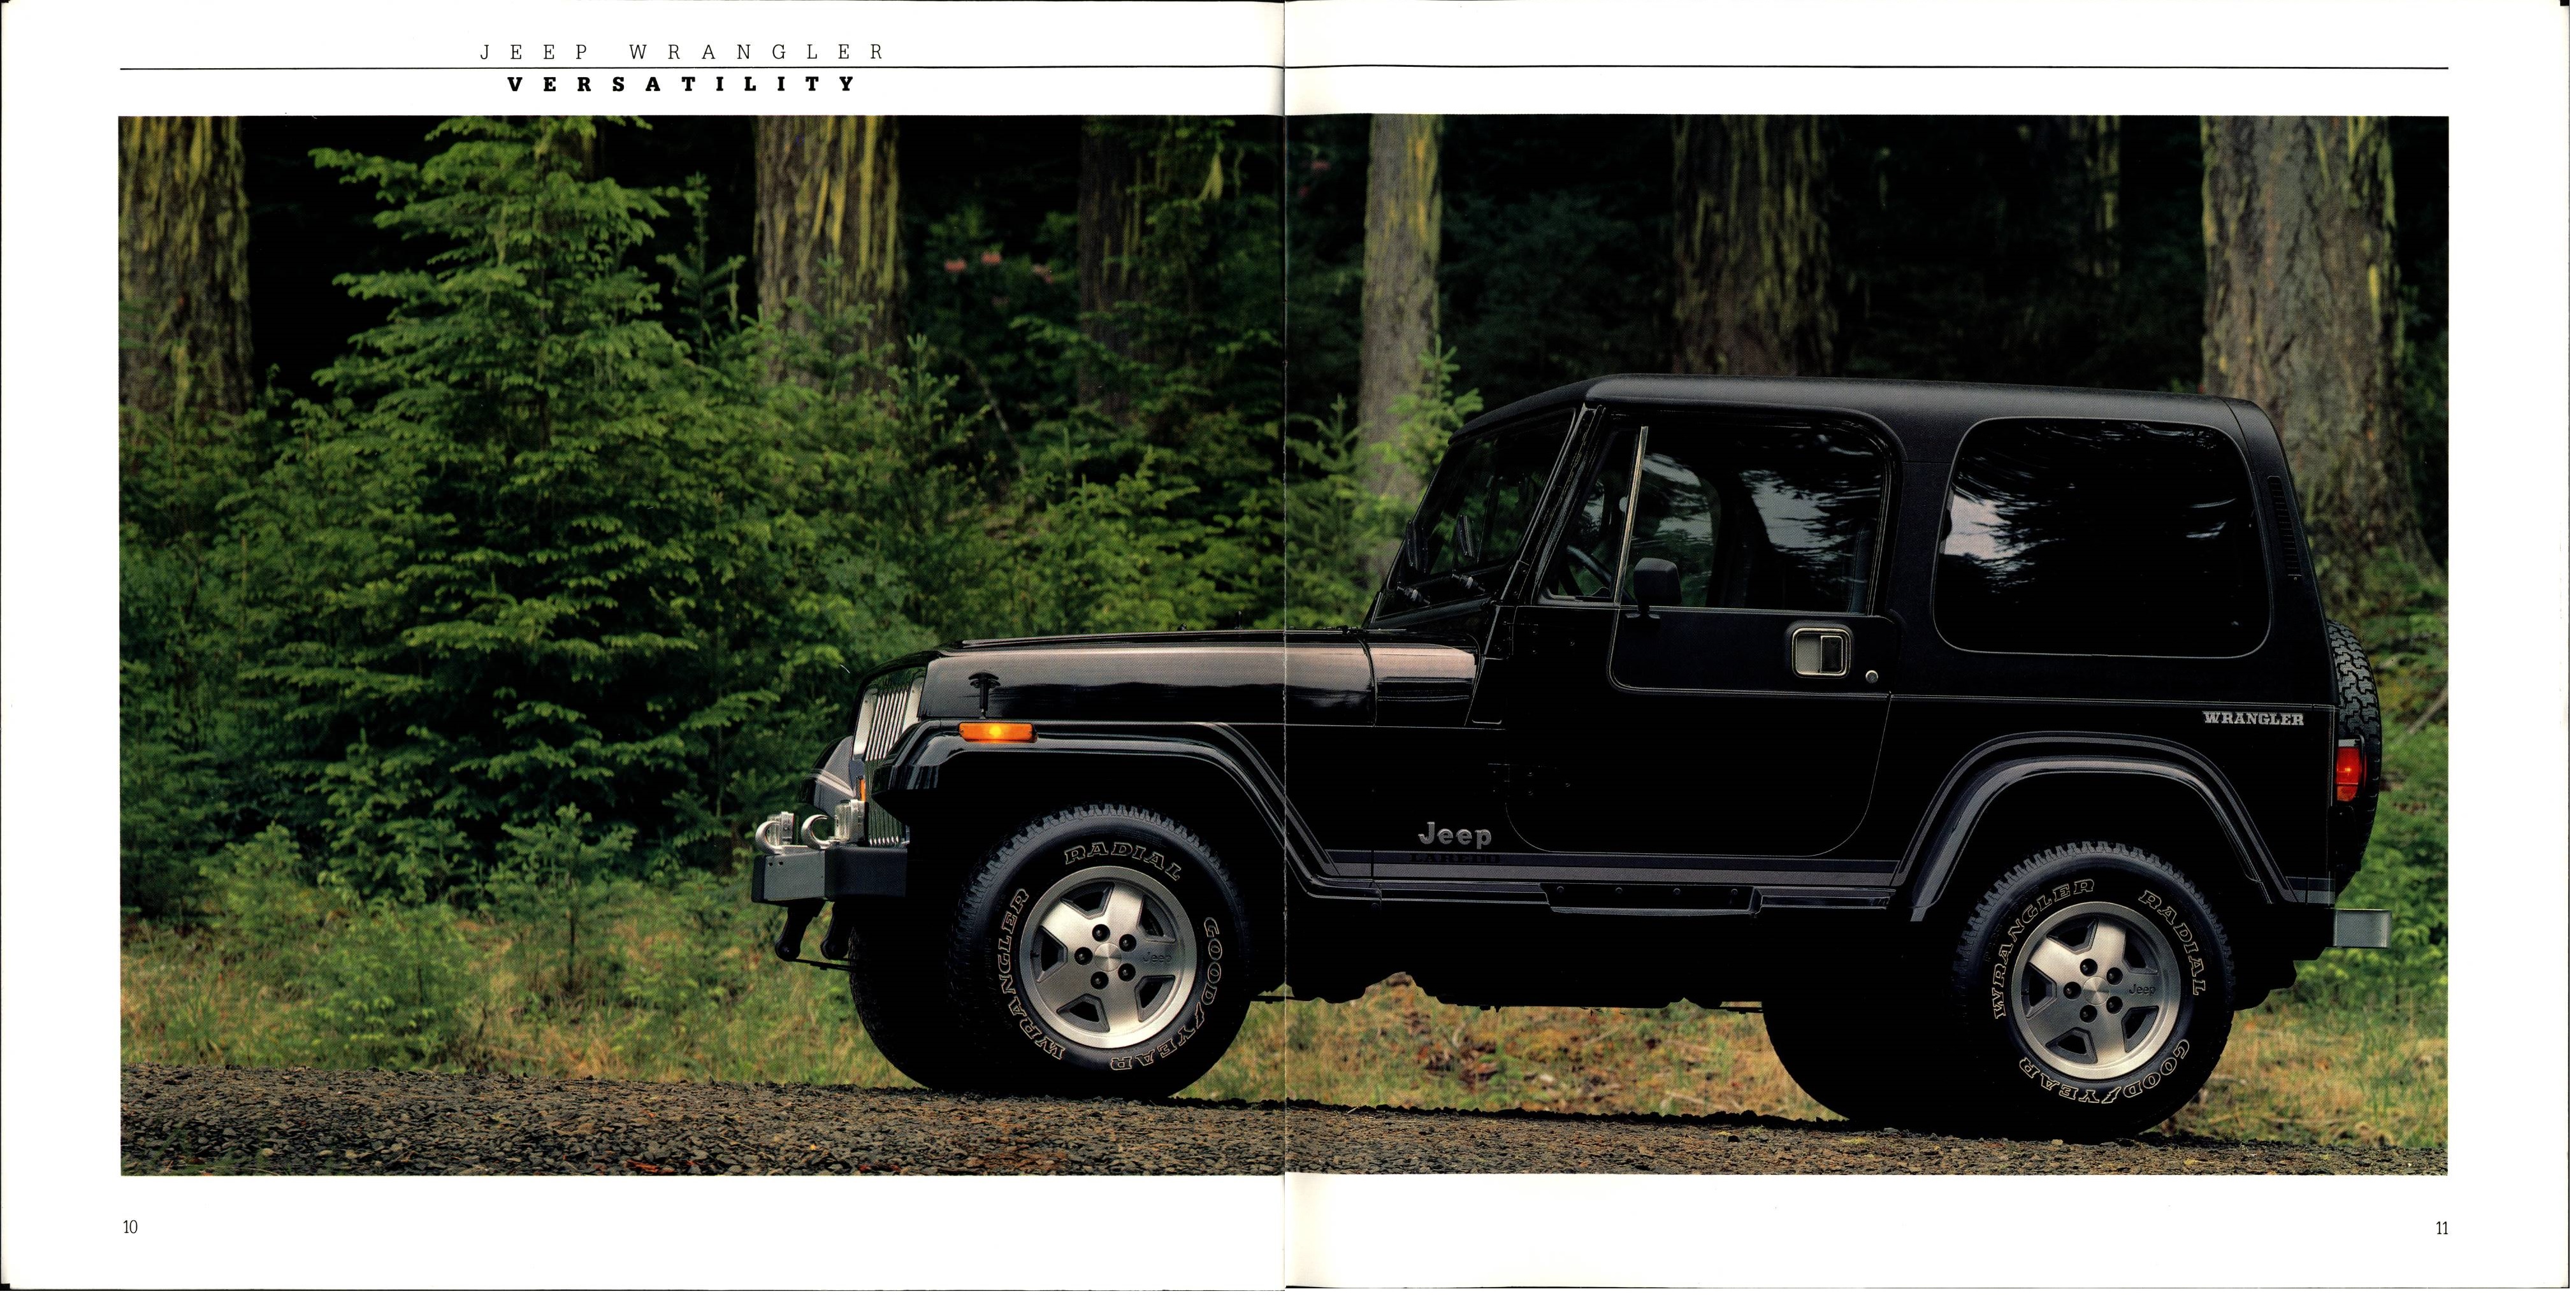 1988 Jeep Wrangler Brochure 10-11